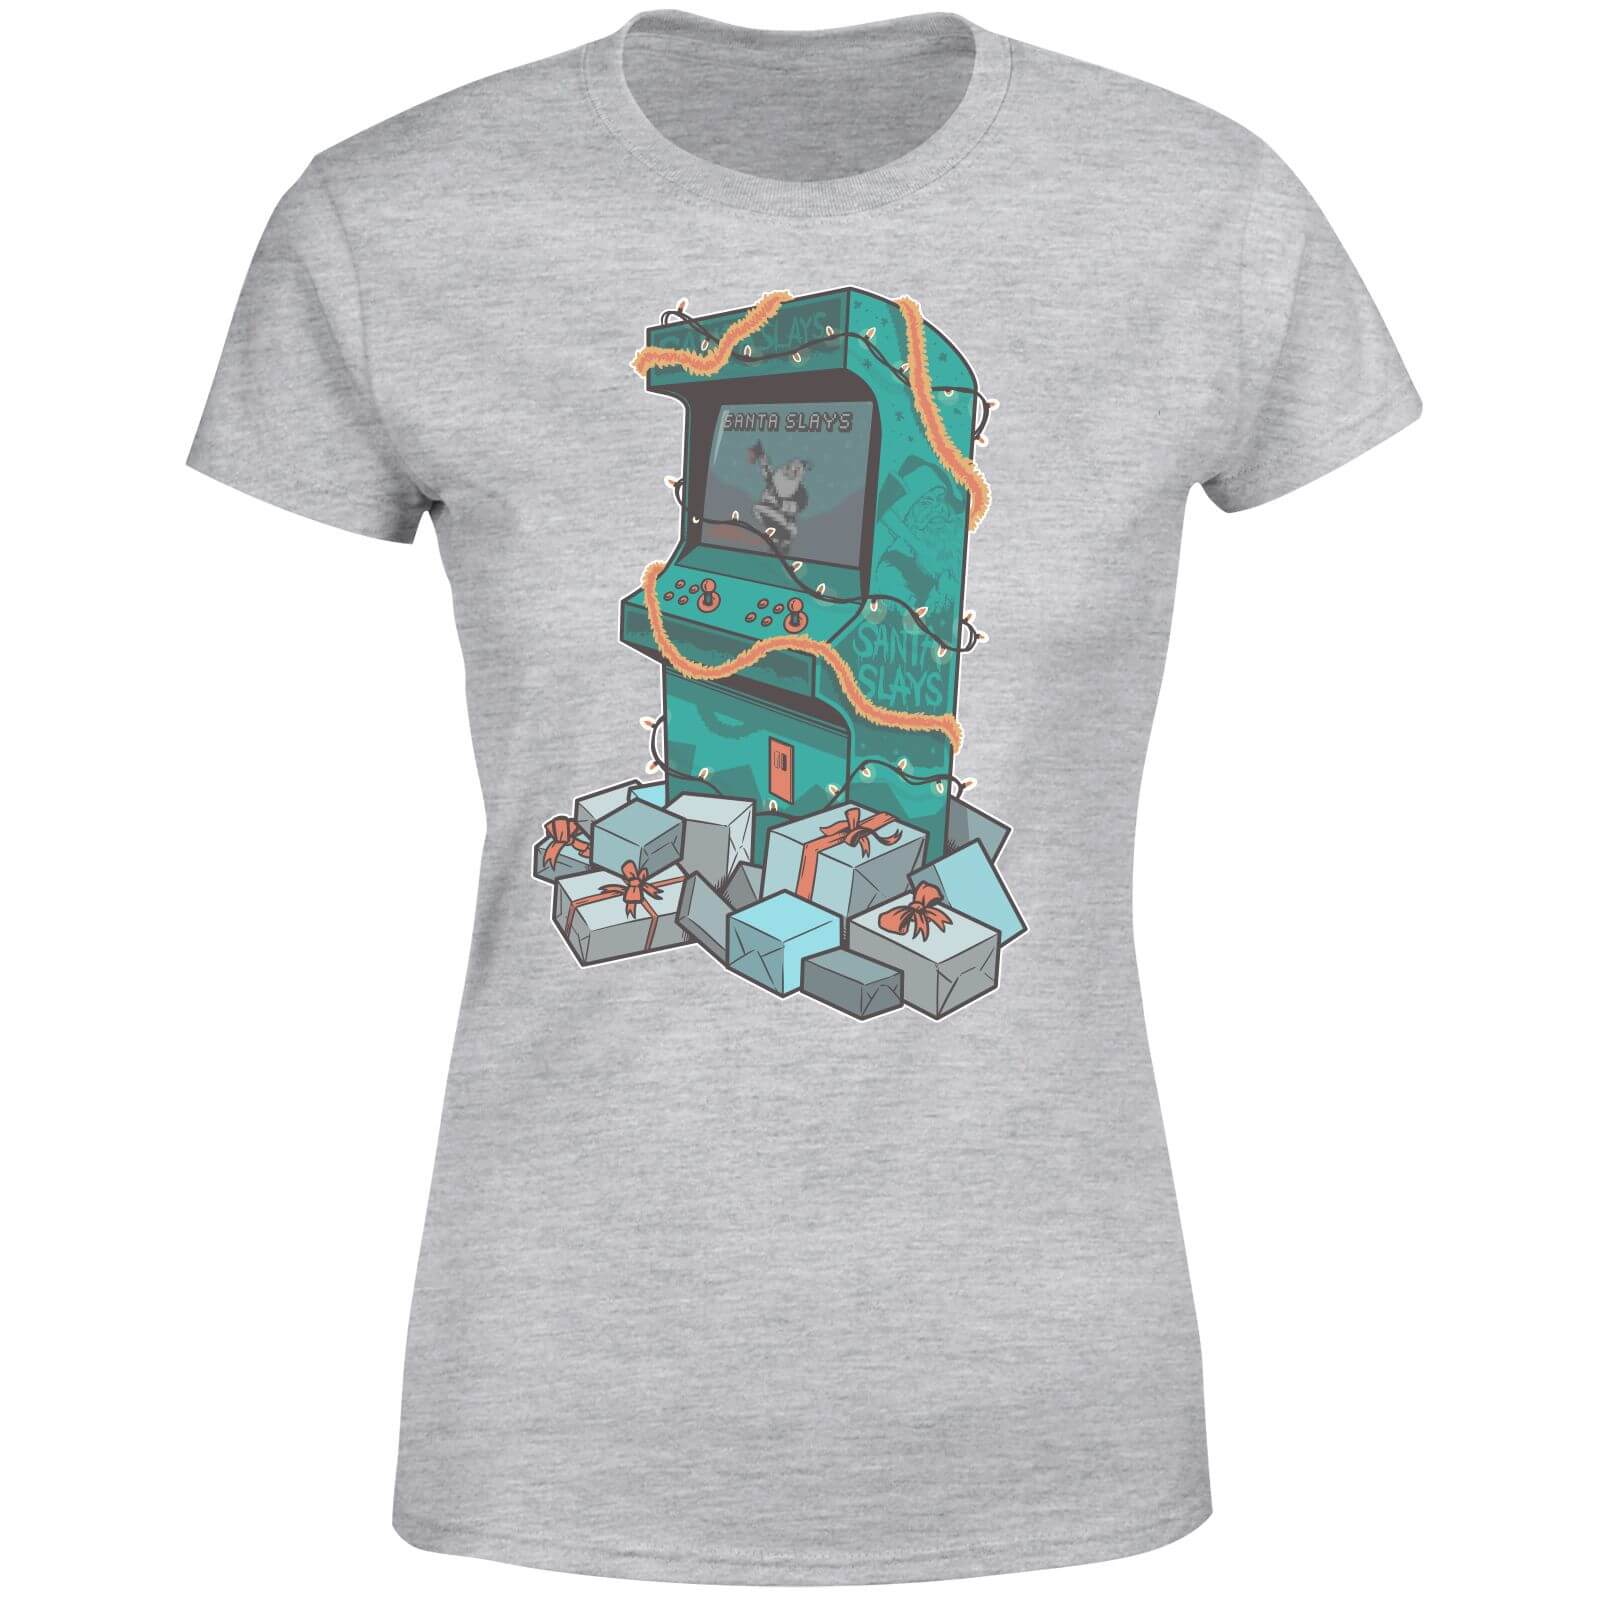 Arcade Tress Women's T-Shirt - Grey - S - Grey